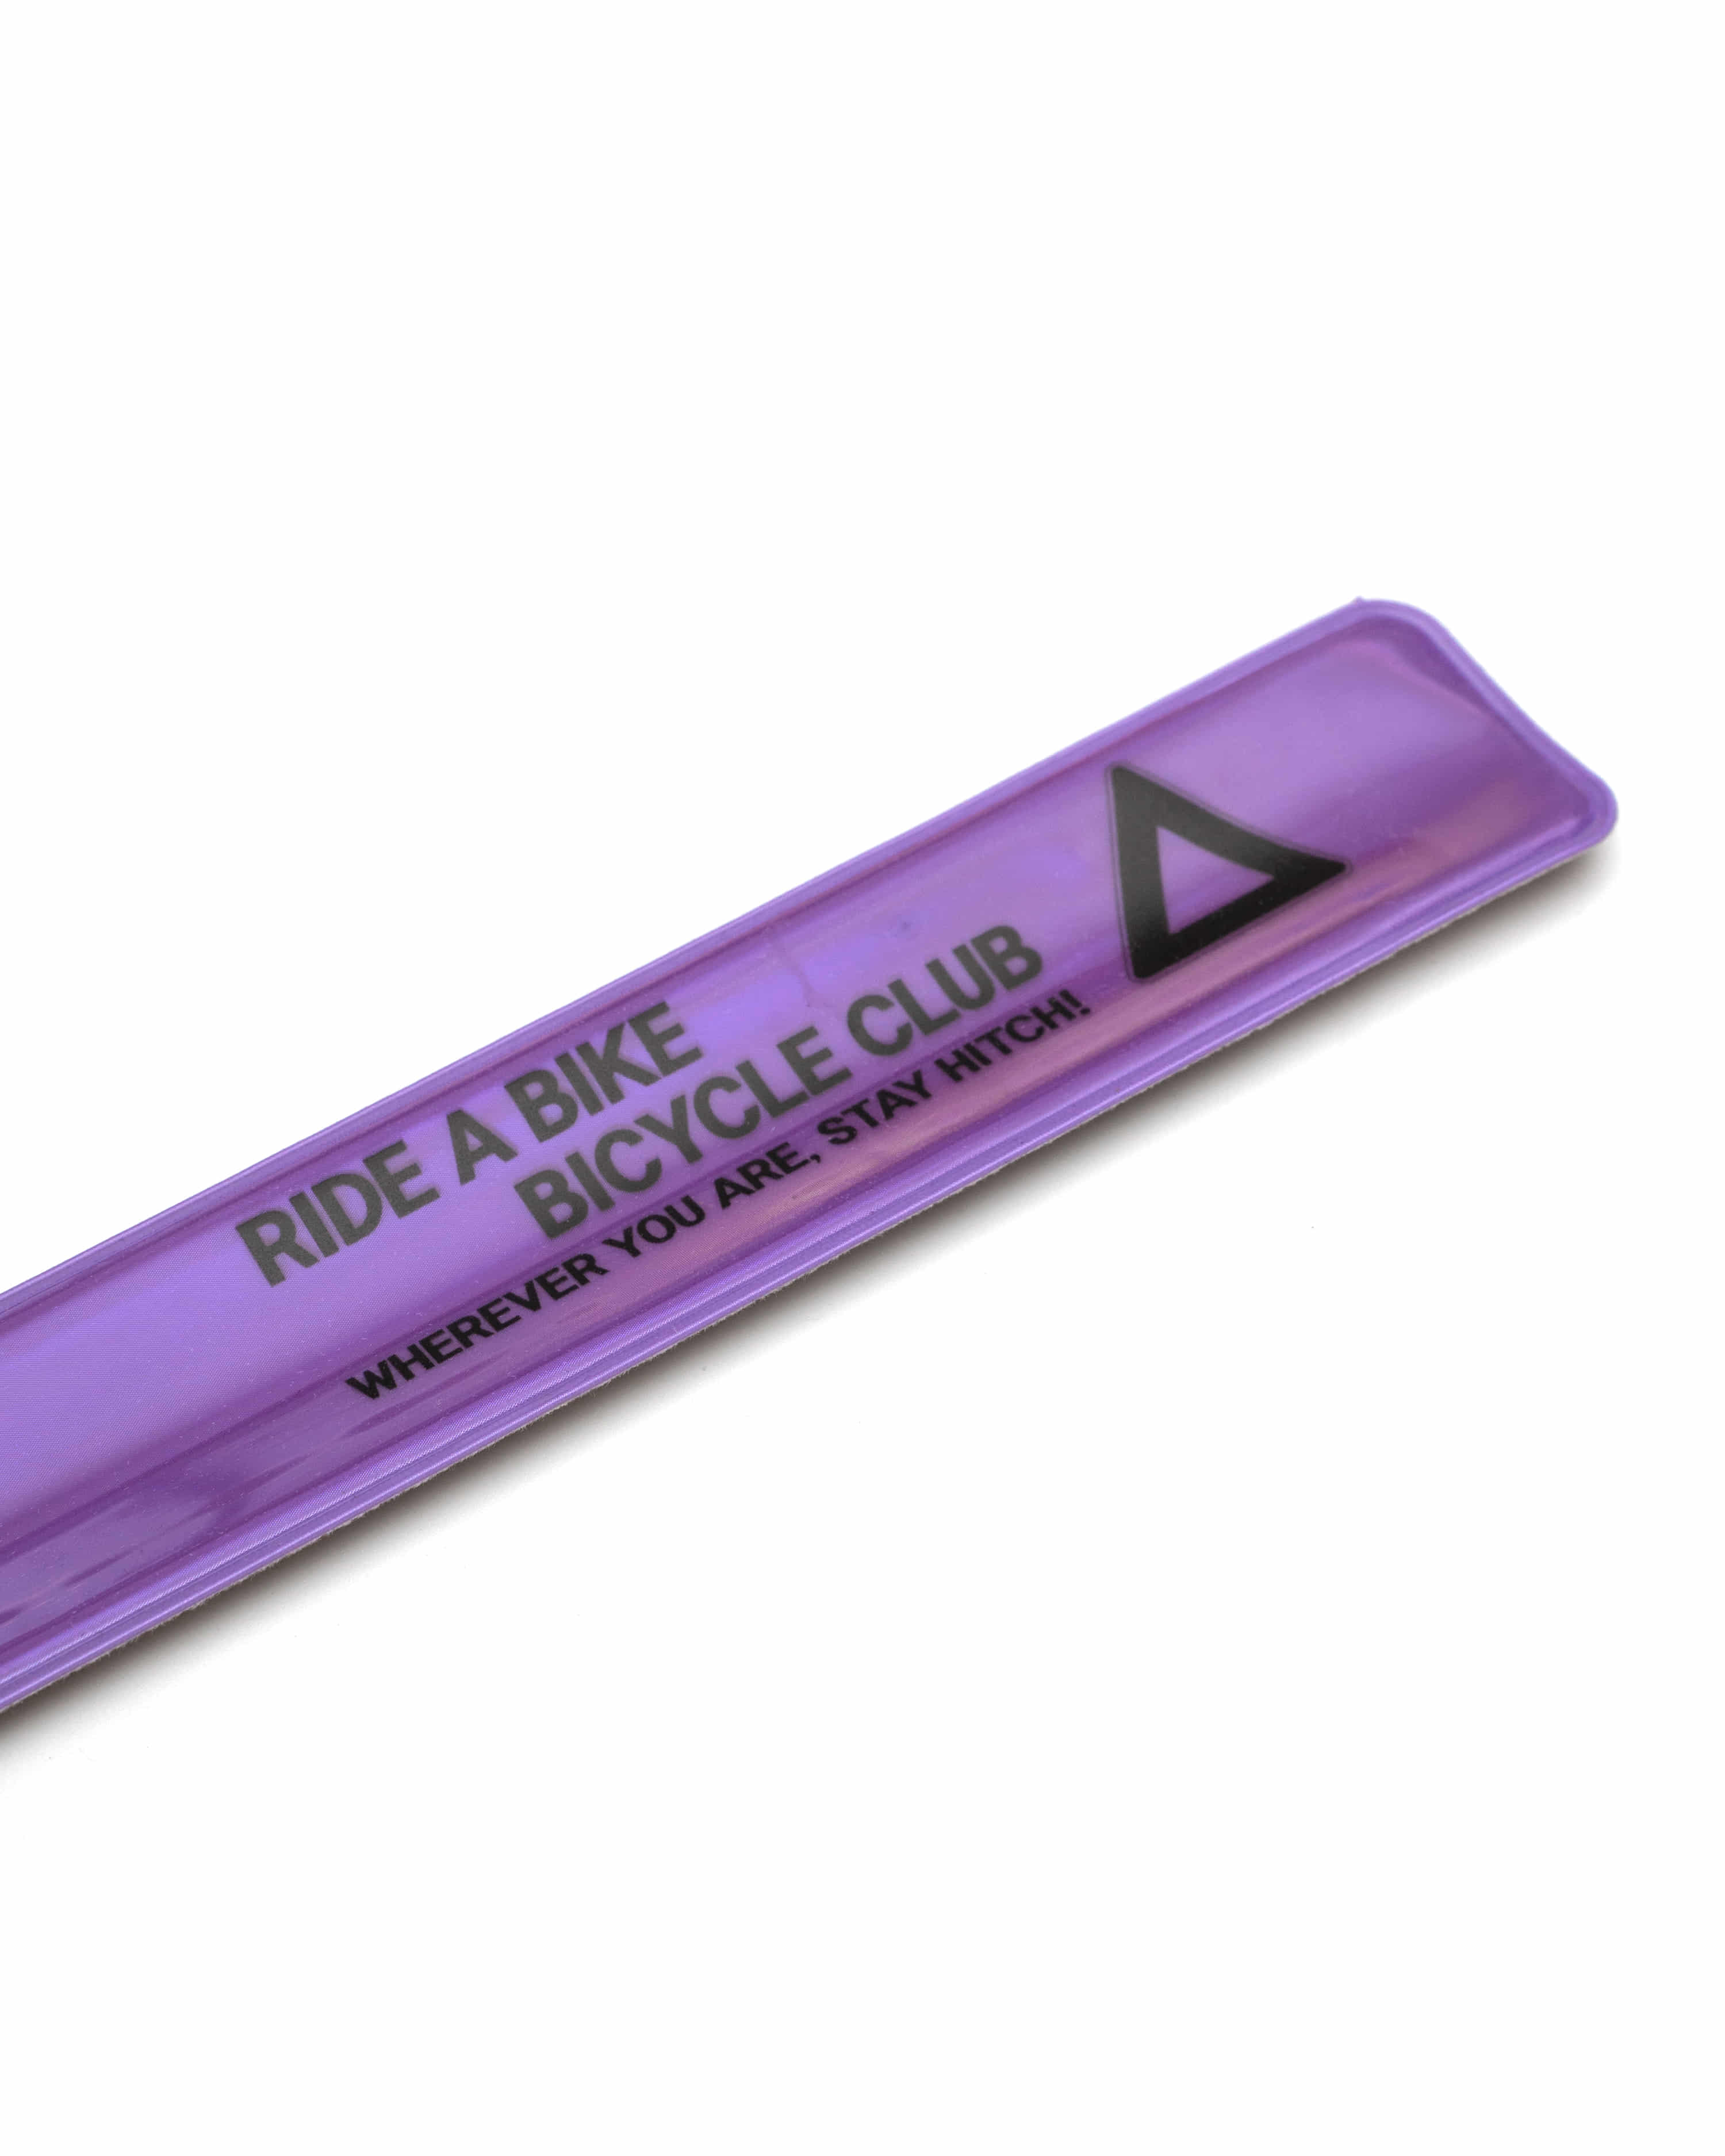 Reflector slapband (Long) - purple